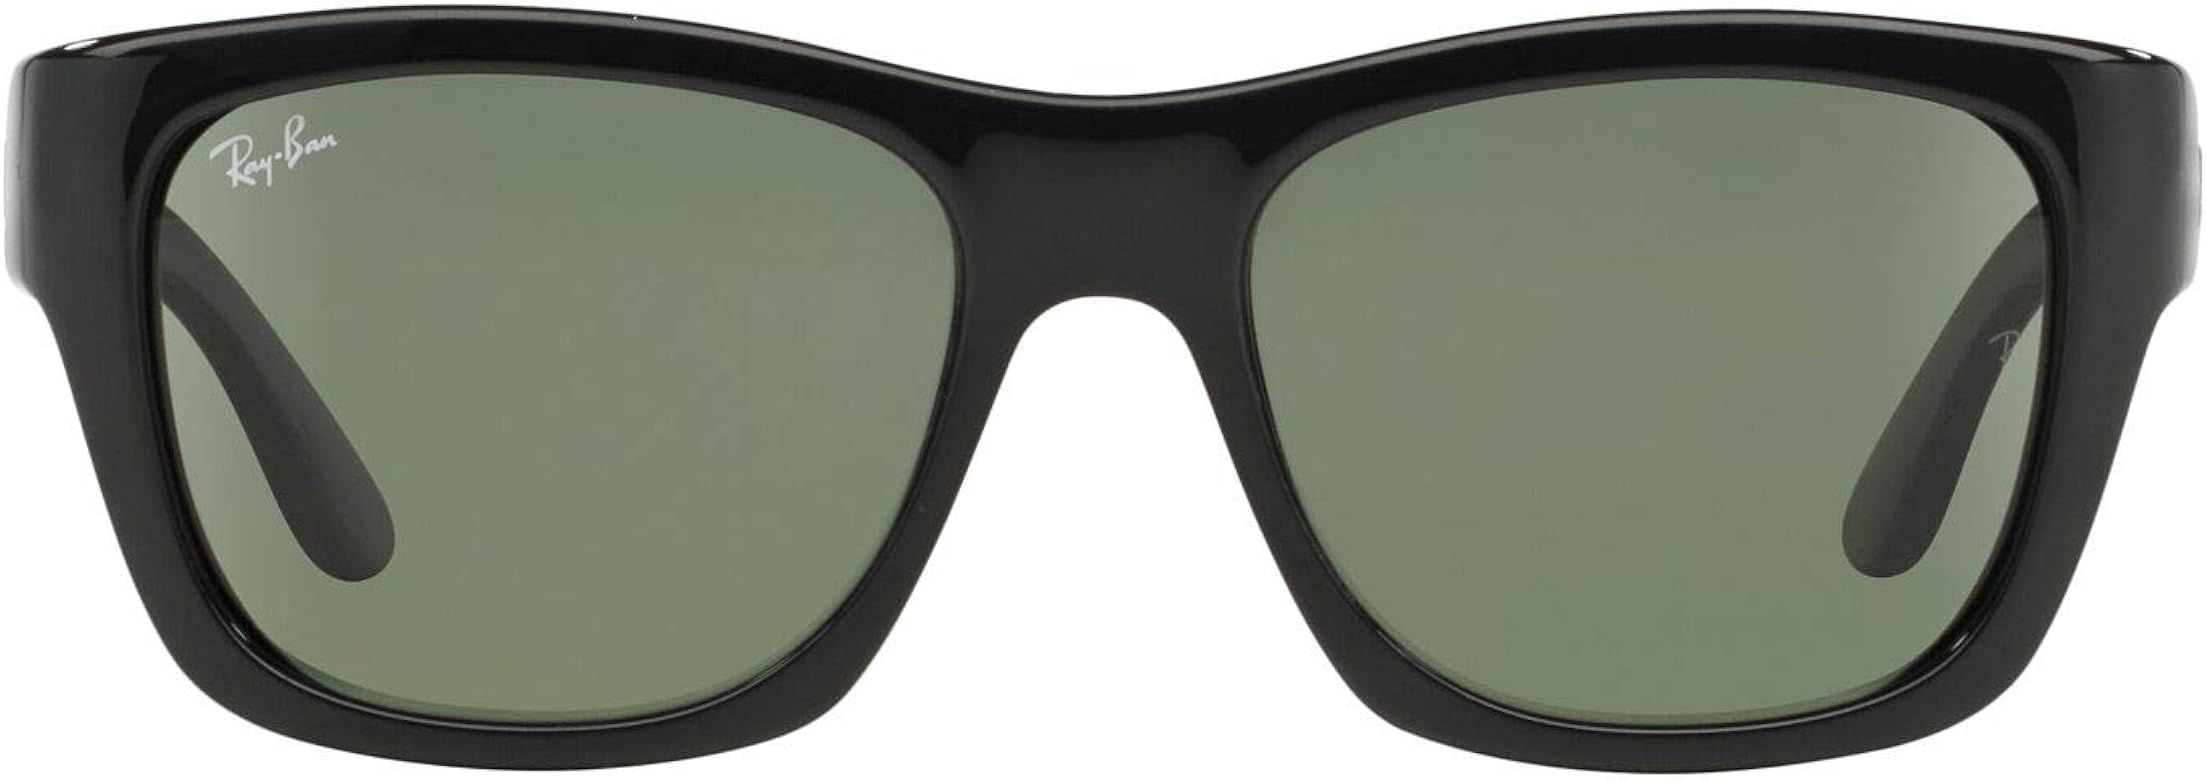 Ray-Ban RB4194 Square Sunglasses, Black/Crystal Green, 53 mm | Amazon (US)